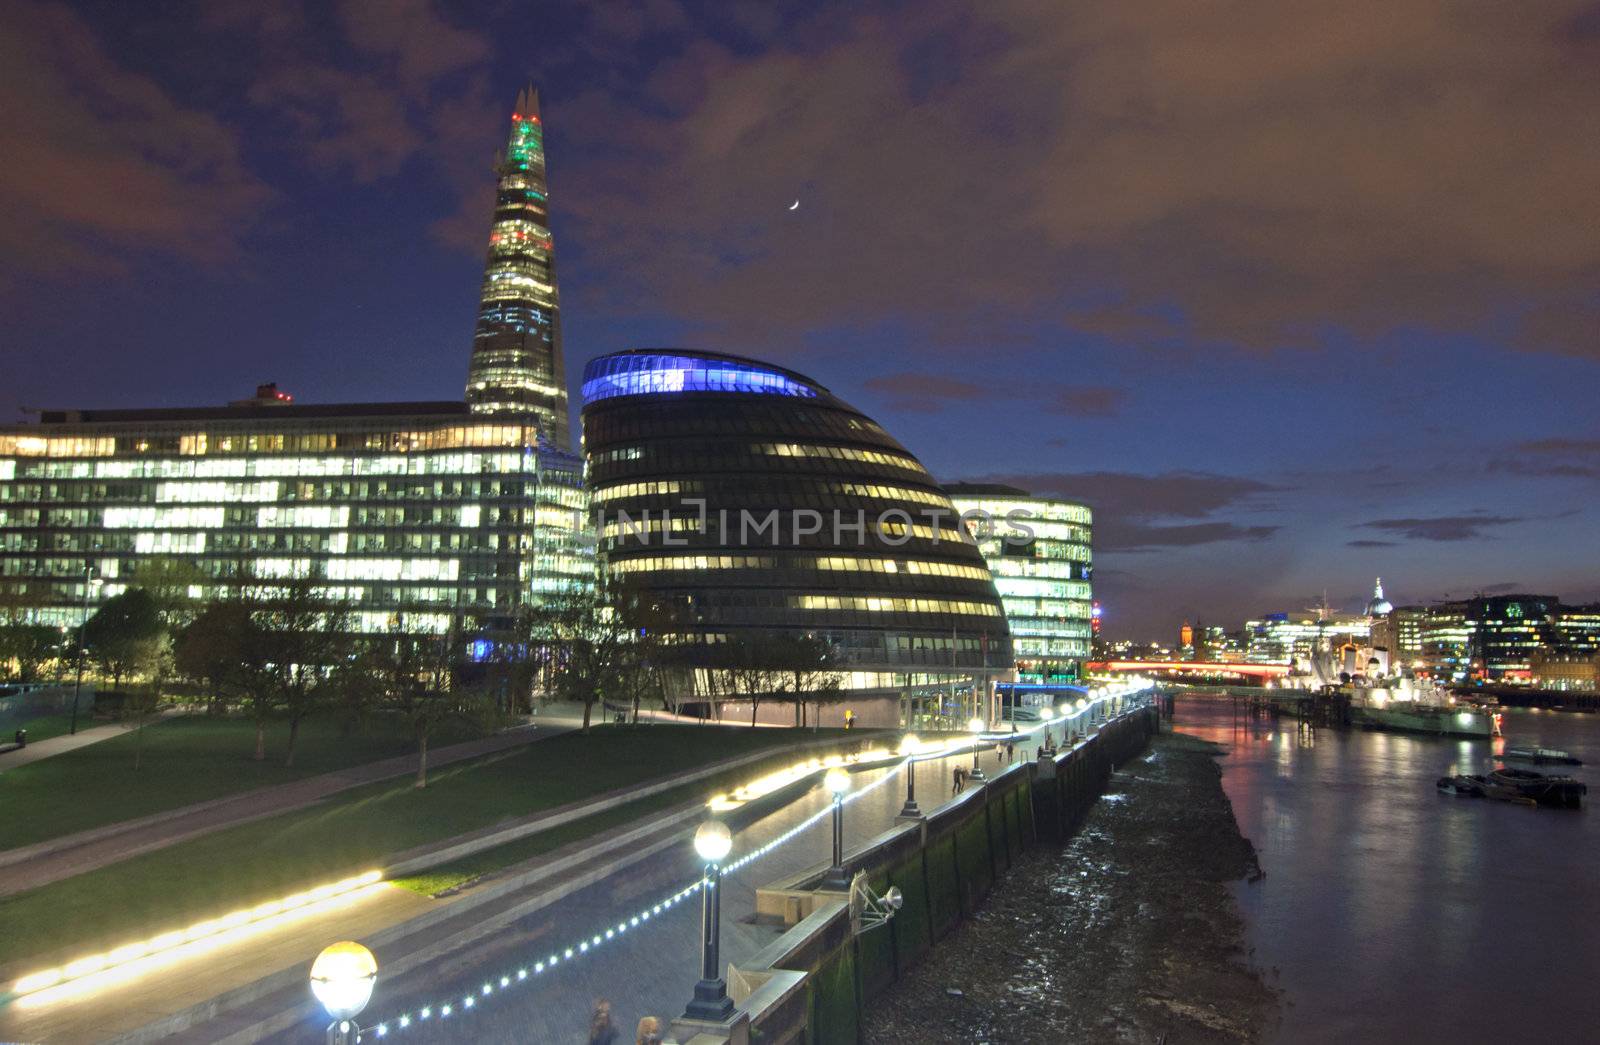 London city hall and skyline at night by unikpix